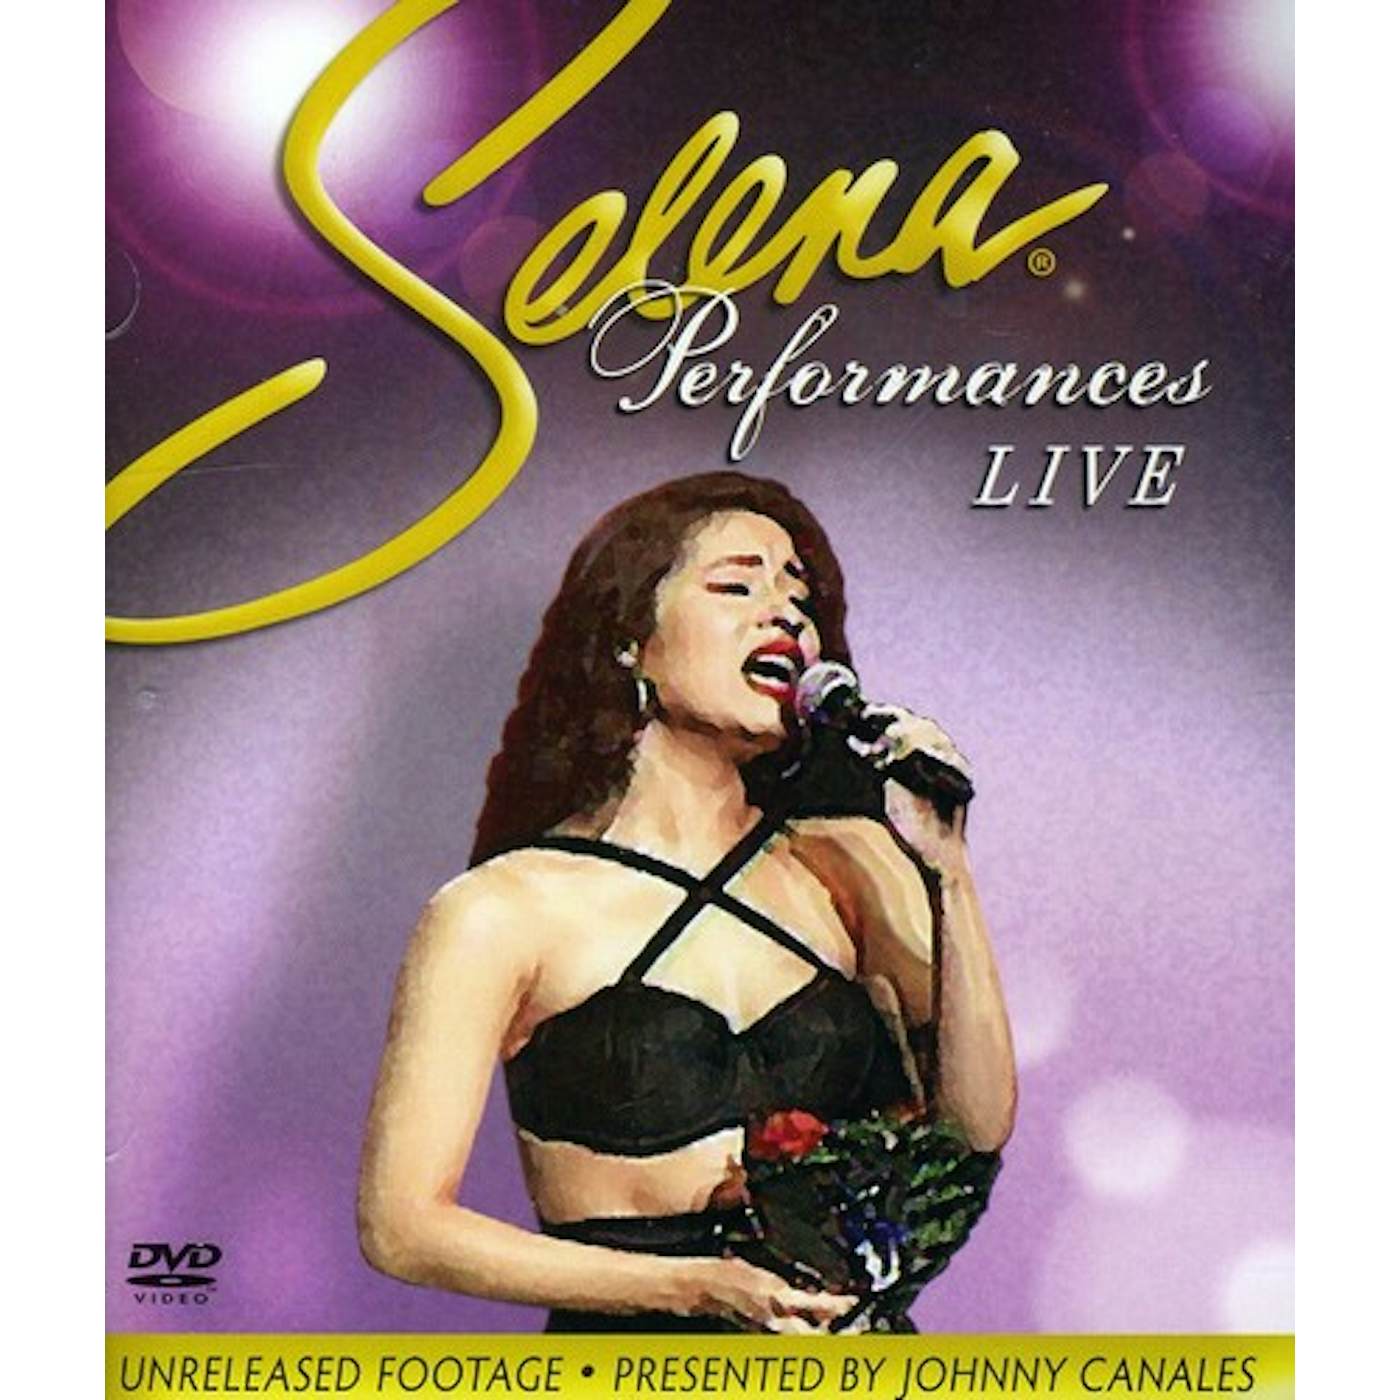 Selena LIVE PERFORMANCES DVD